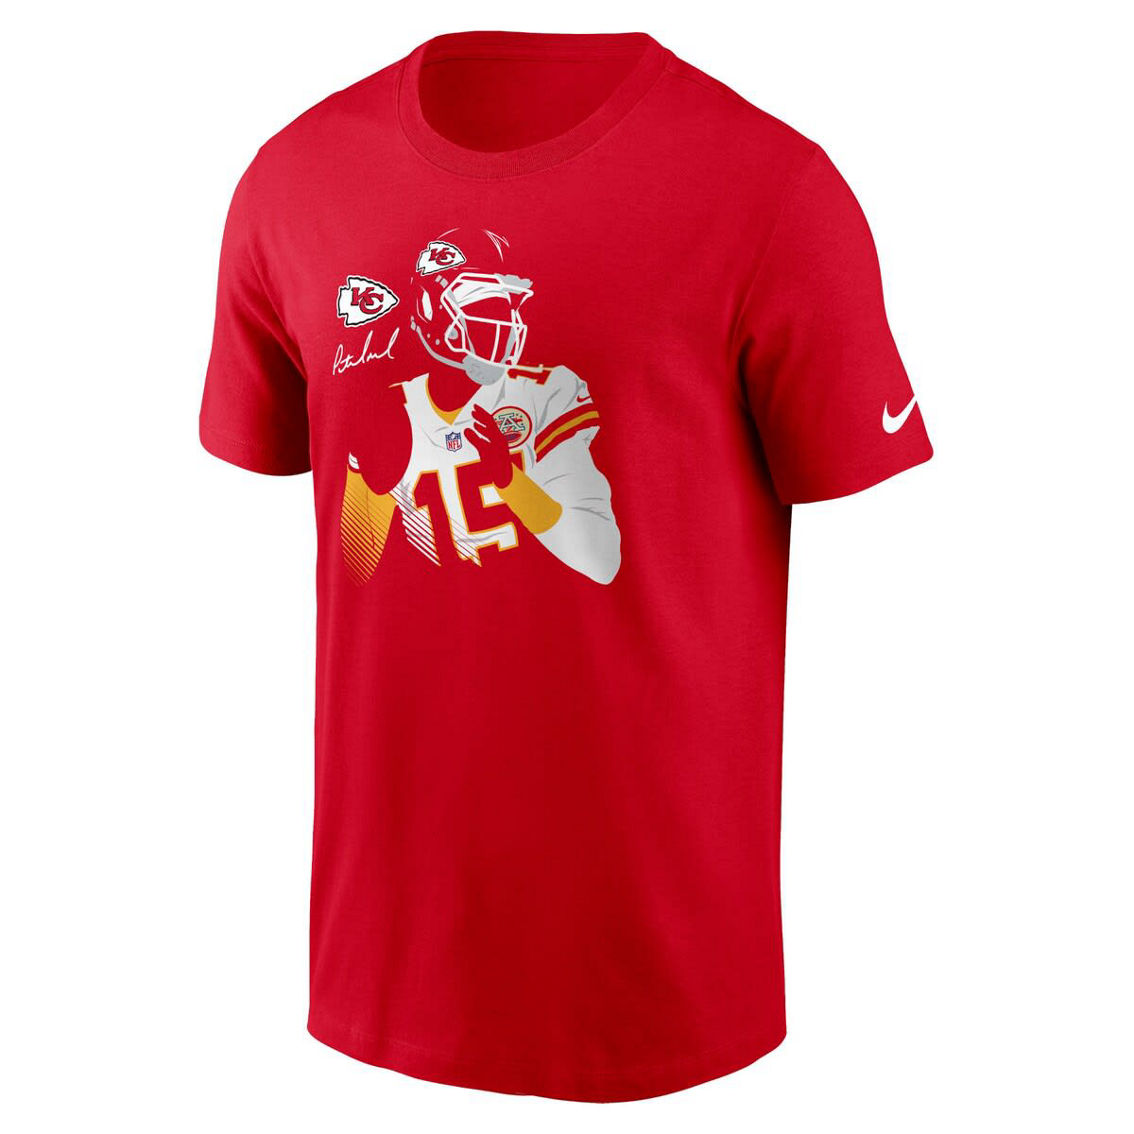 Nike Men's Patrick Mahomes Red Kansas City Chiefs Player Graphic T-Shirt - Image 3 of 4